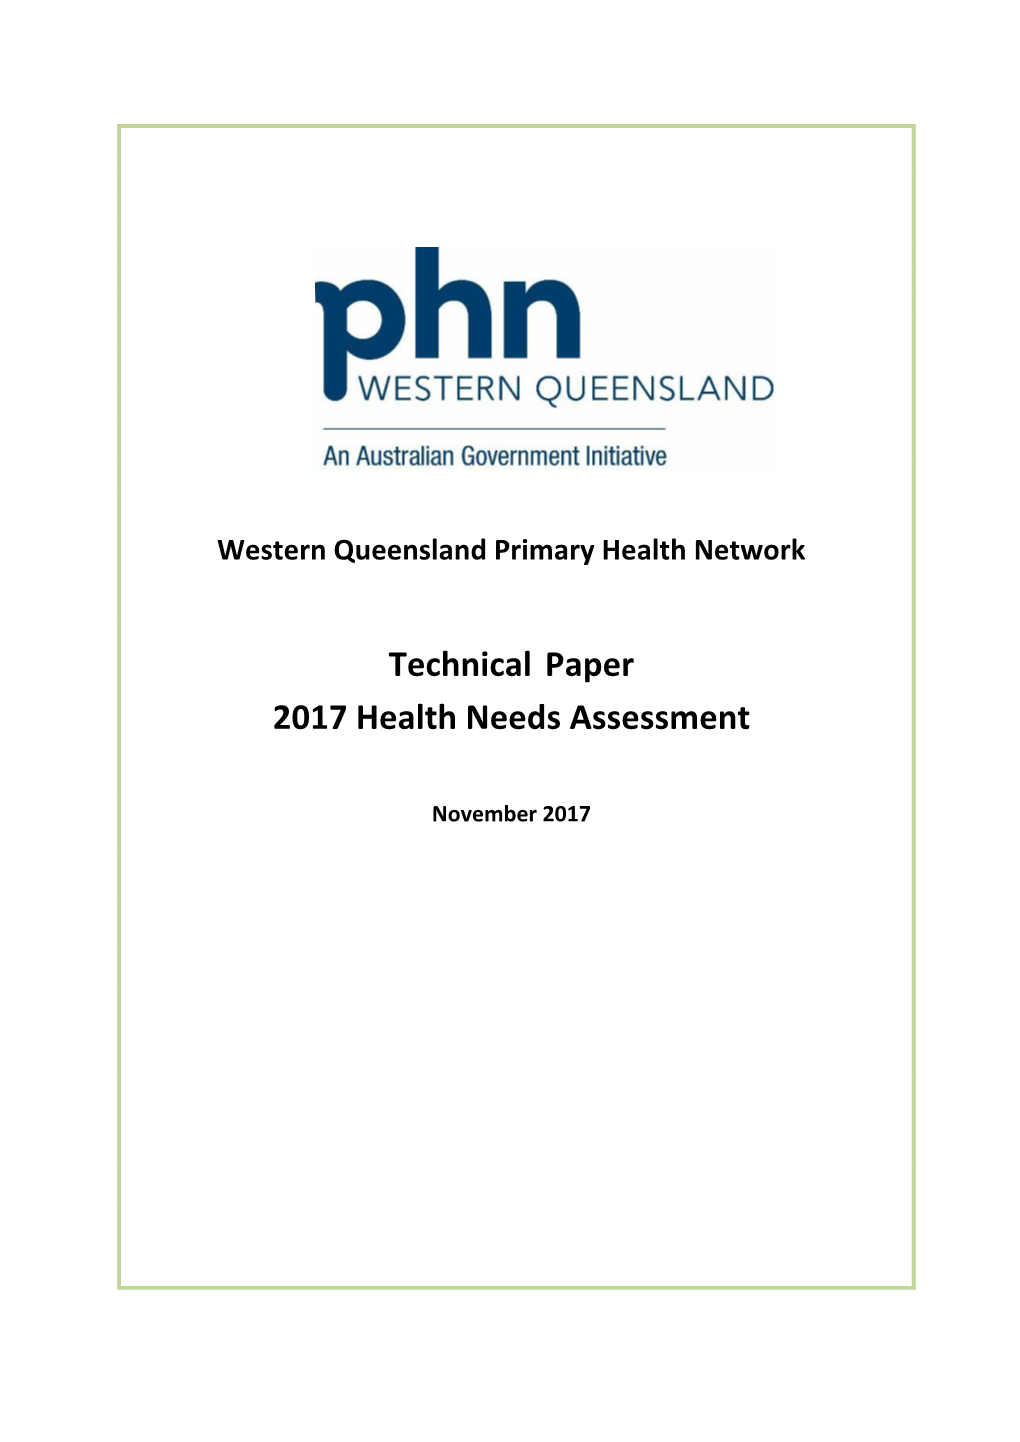 Technical Paper 2017 Health Needs Assessment